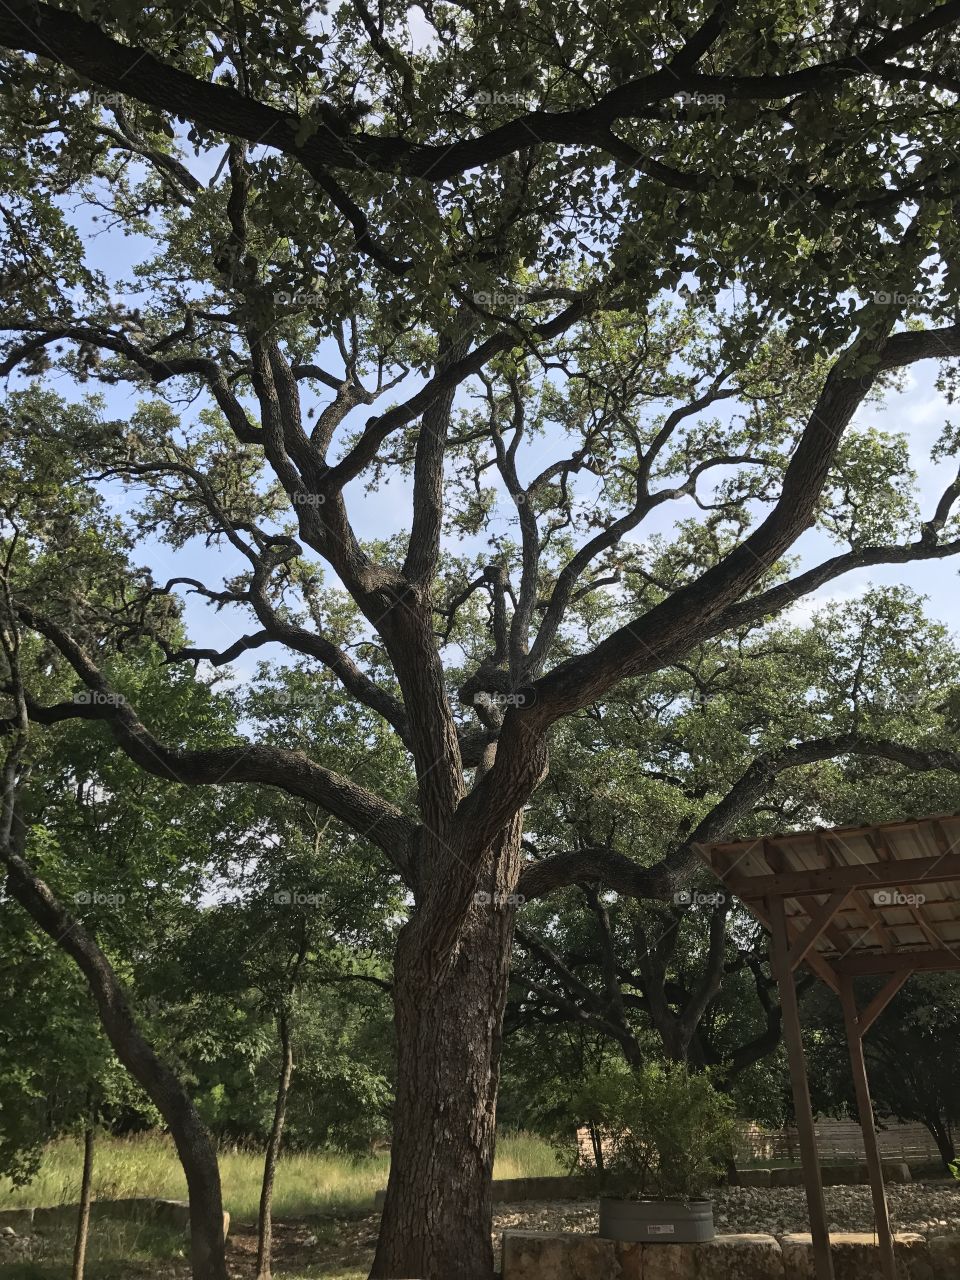 Big Texas tree
Magnolia pancake haus 
San Antonio Texas 